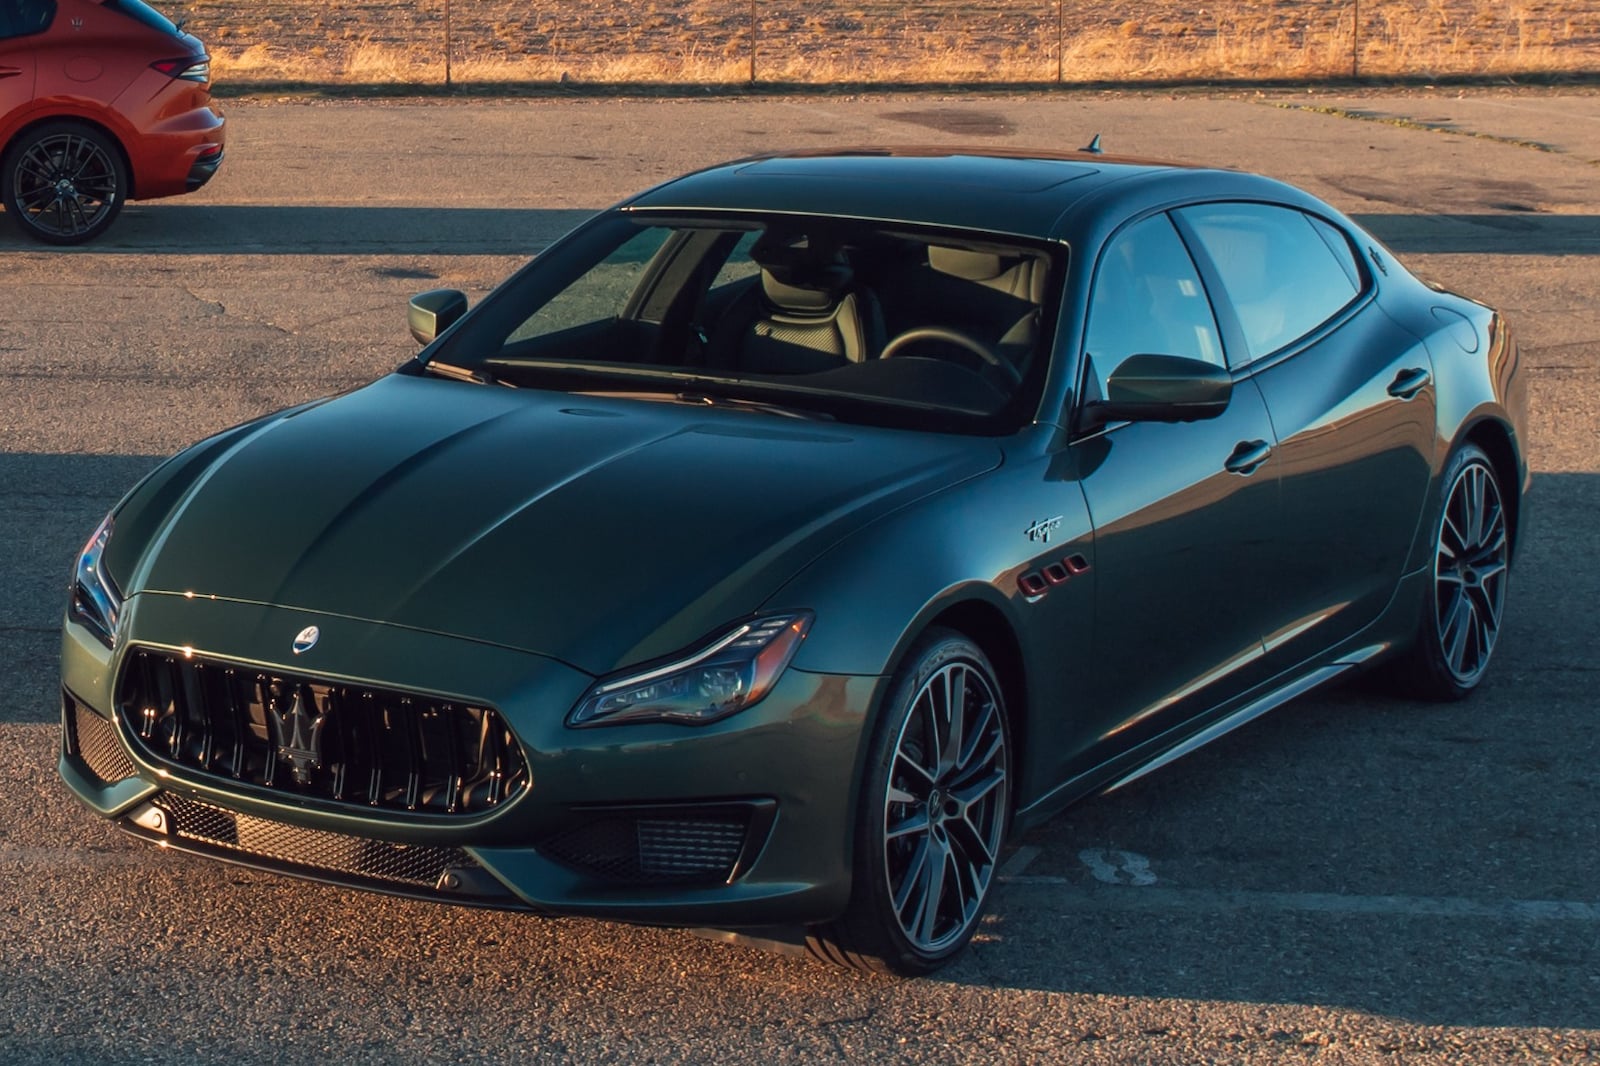 Custom-Built 2022 Maserati Models Come With Ferrari Power | CarBuzz